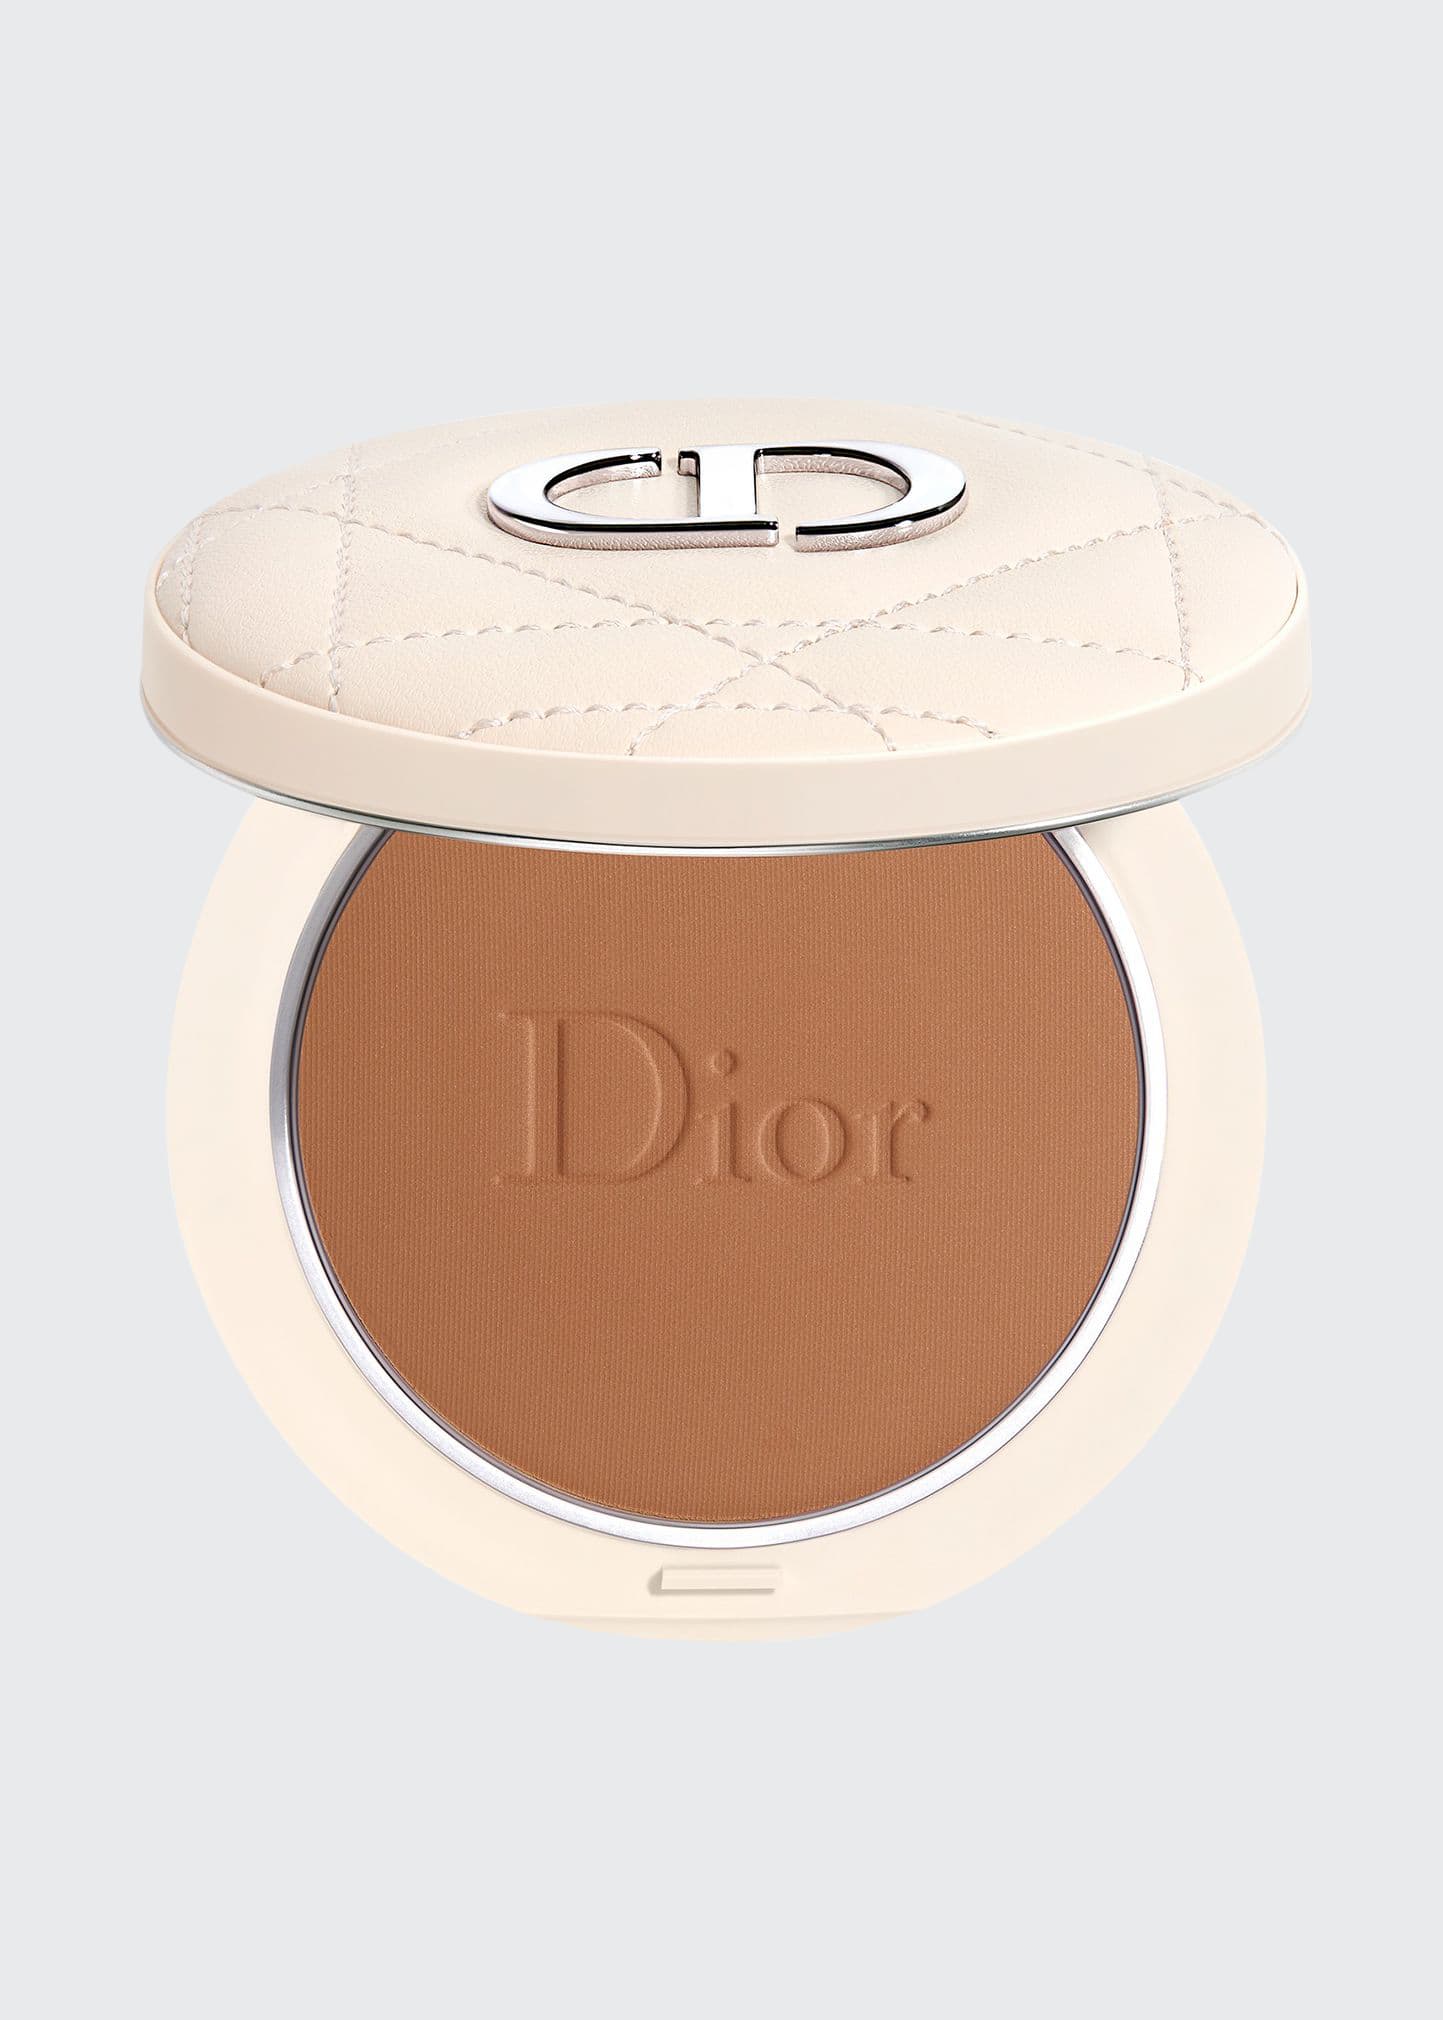 Dior Skin Forever Natural Bronze Powder Bronzer In 007